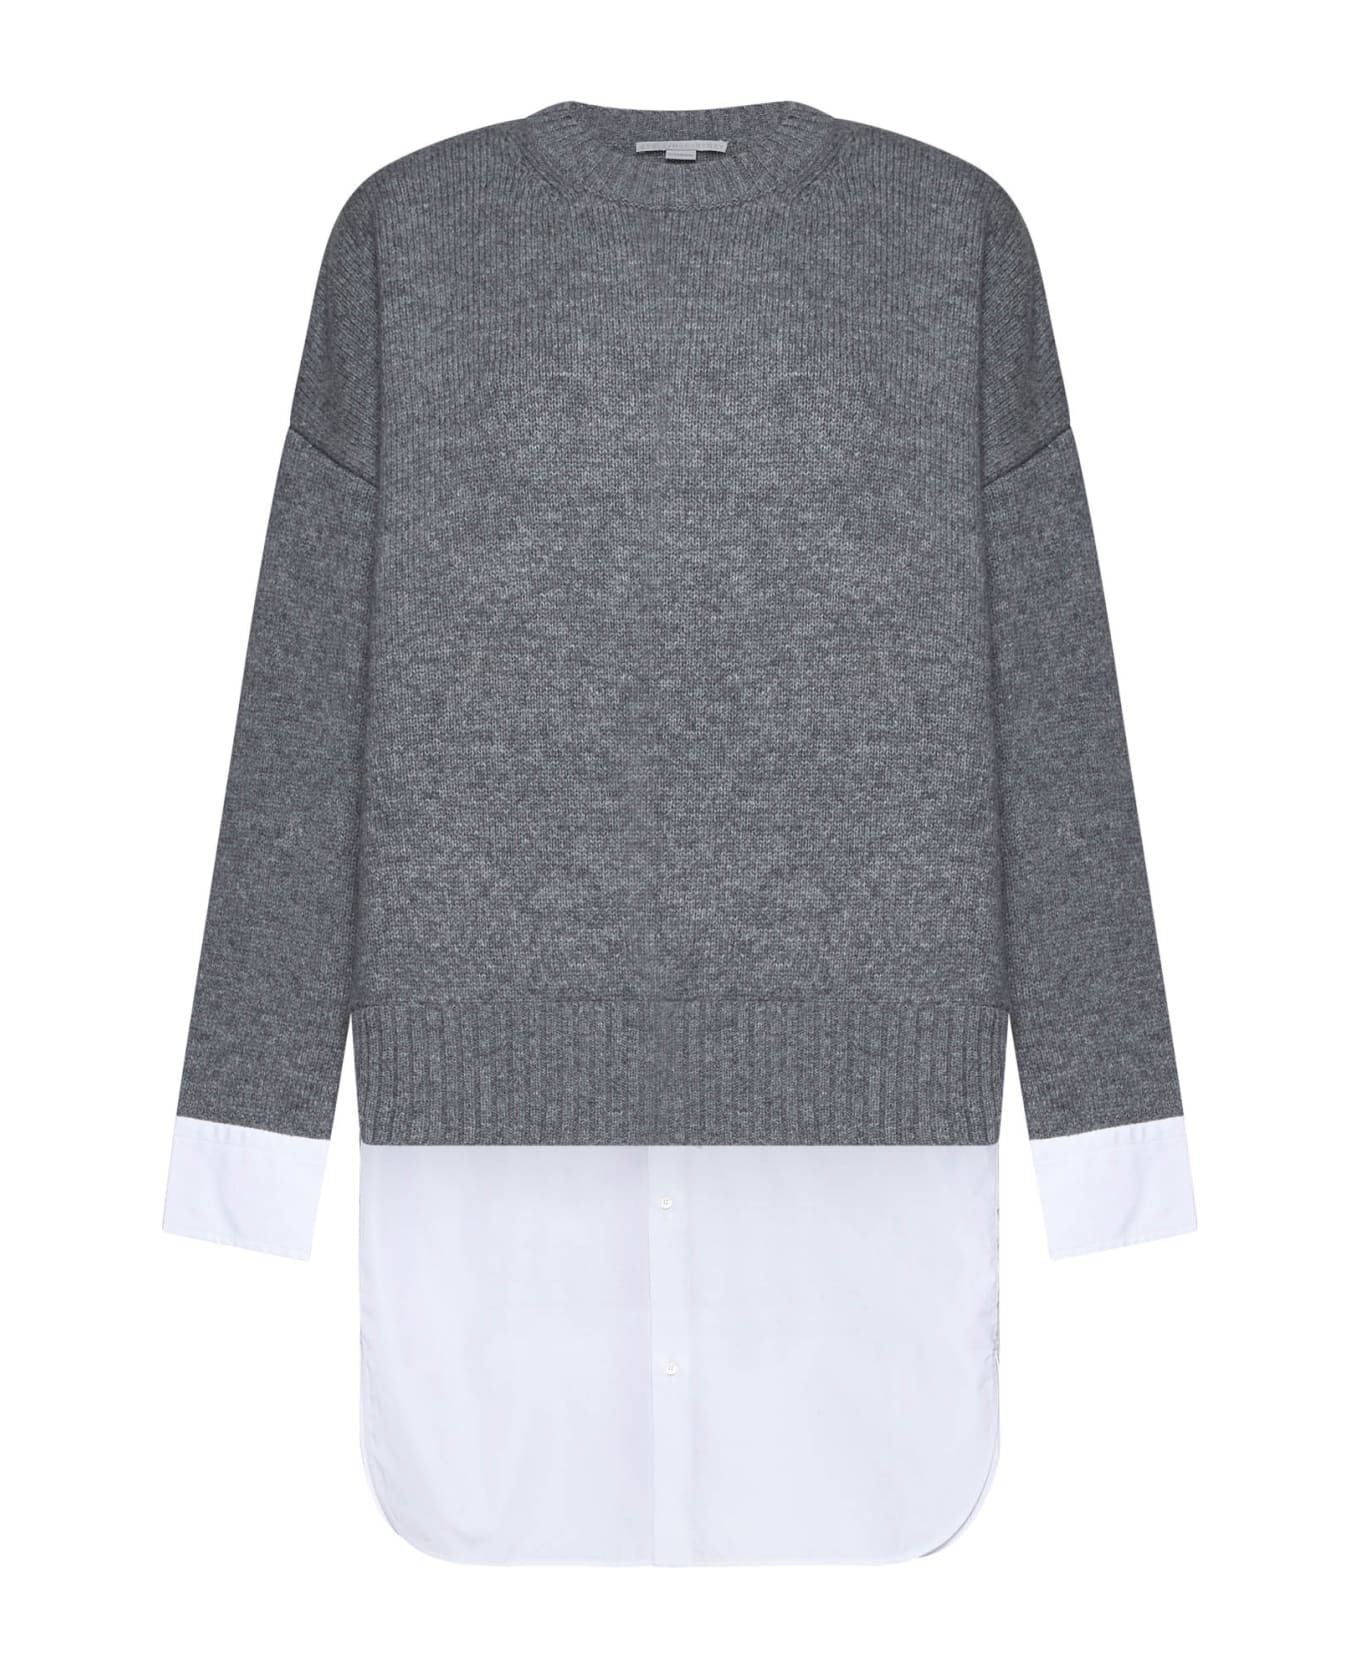 Stella McCartney Sweater - Grey ニットウェア